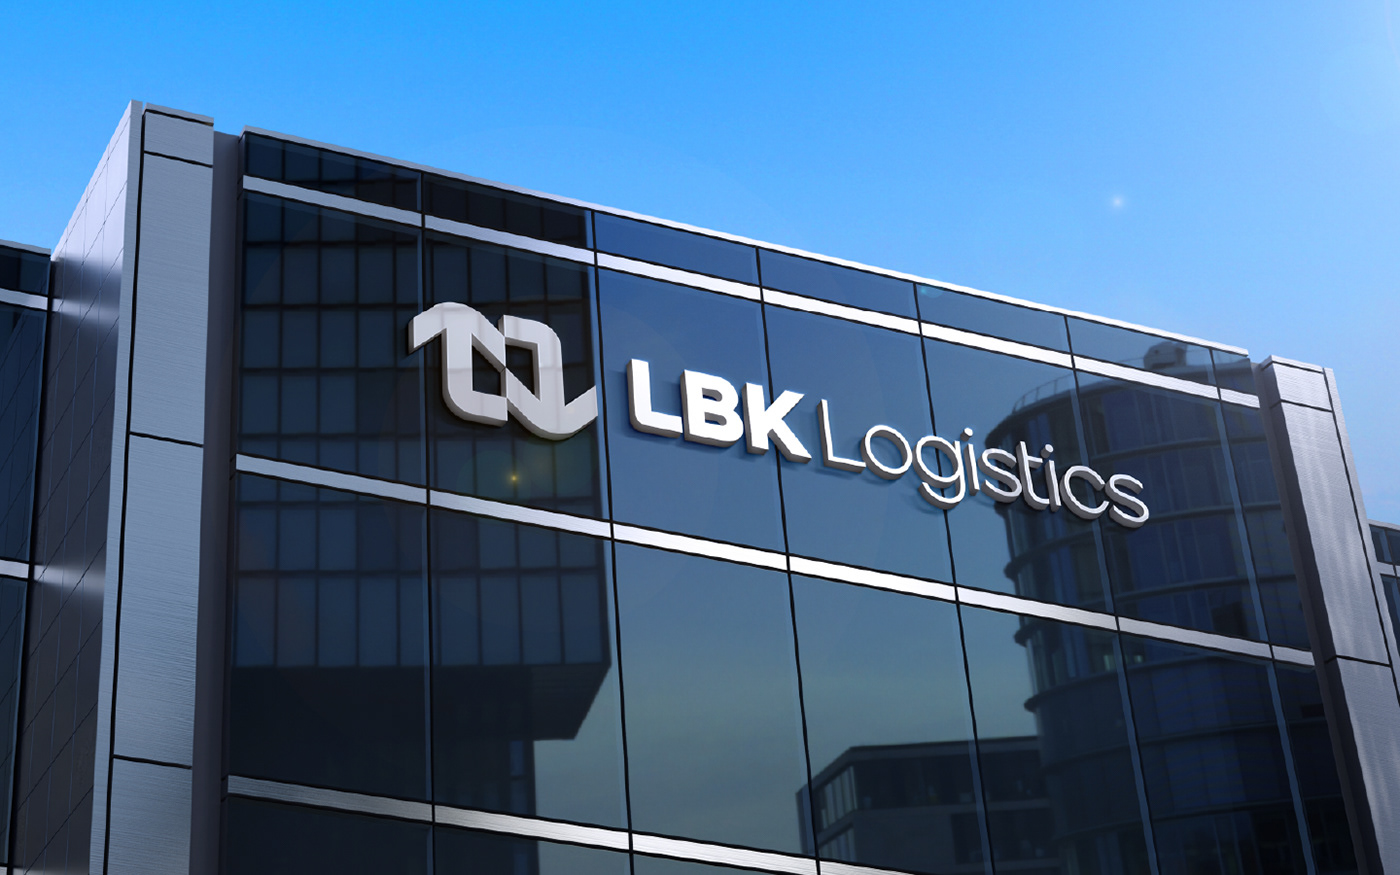 brand identity company identity logistic Logistics logistics company logo Truck visual identity